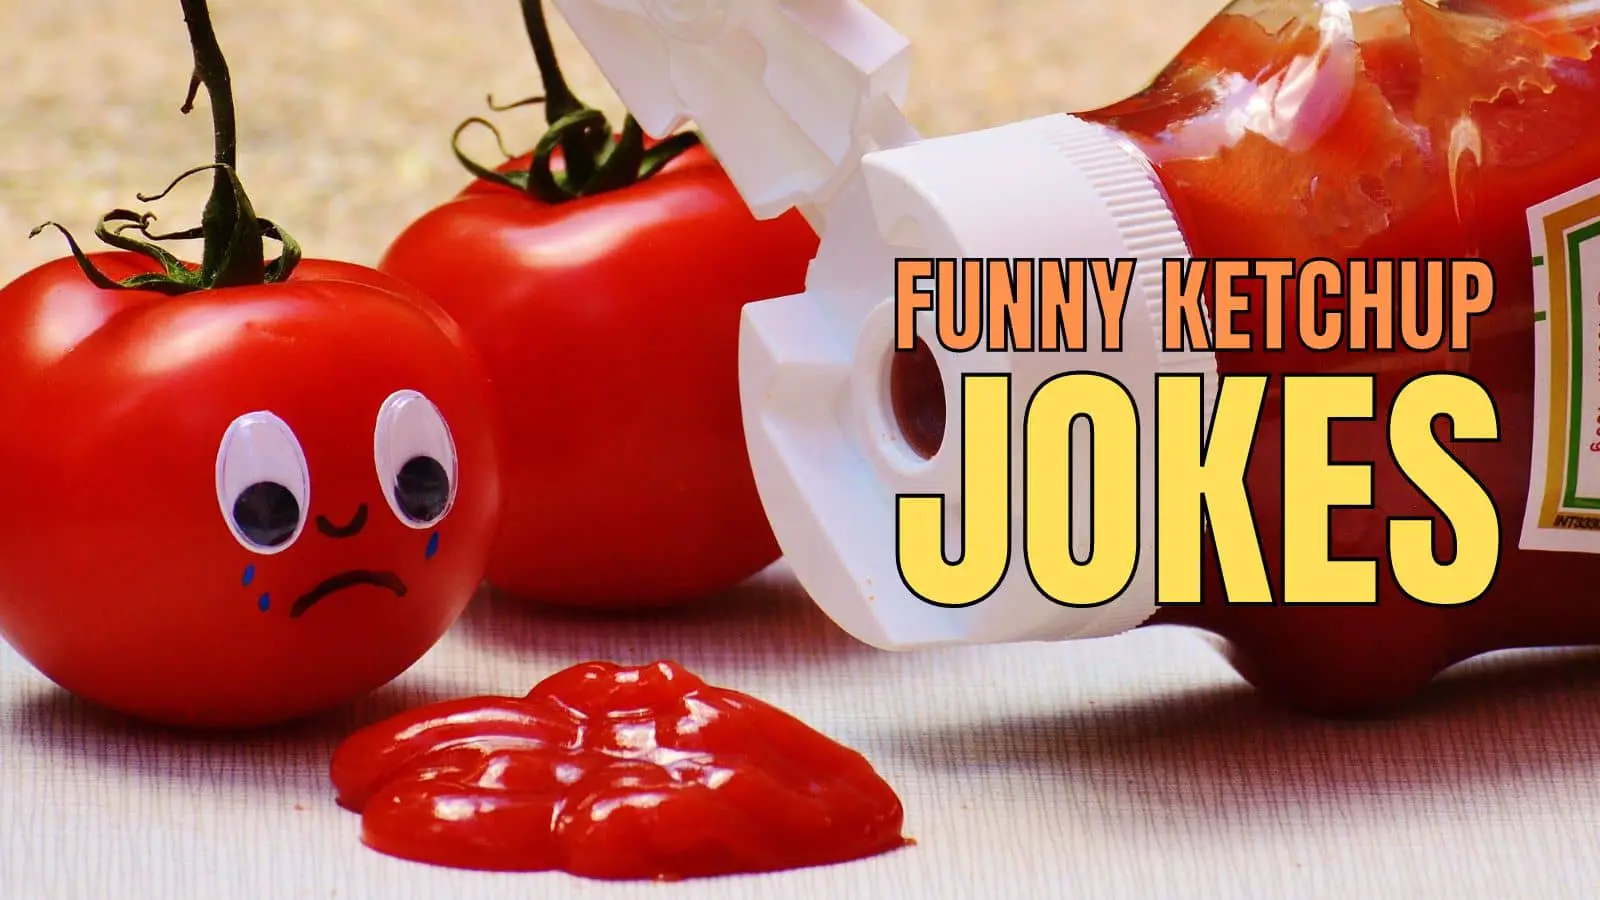 Ketchup Jokes on Tomato